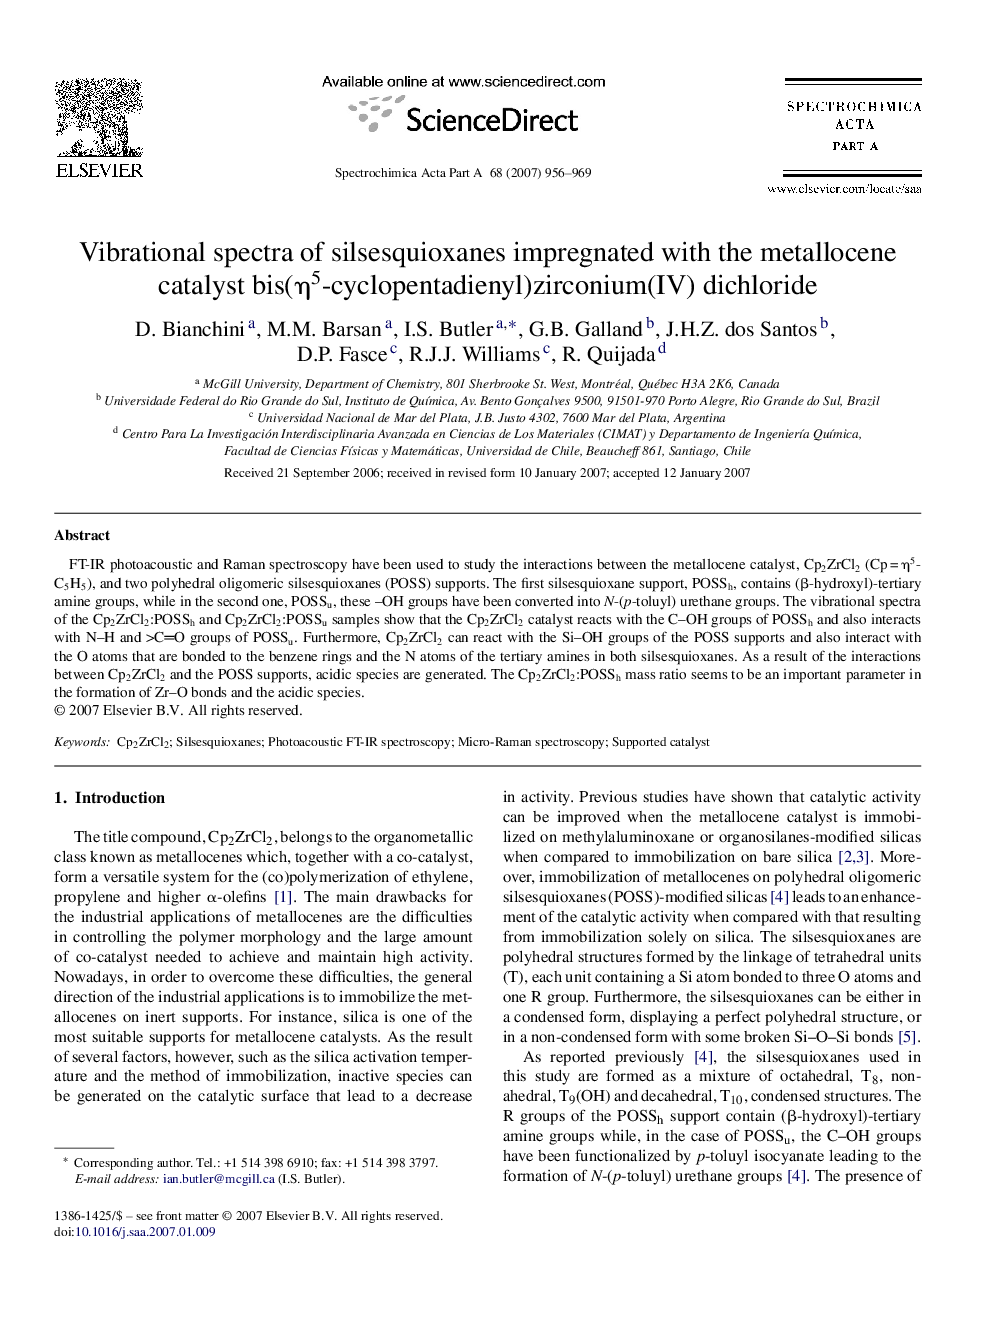 Vibrational spectra of silsesquioxanes impregnated with the metallocene catalyst bis(η5-cyclopentadienyl)zirconium(IV) dichloride